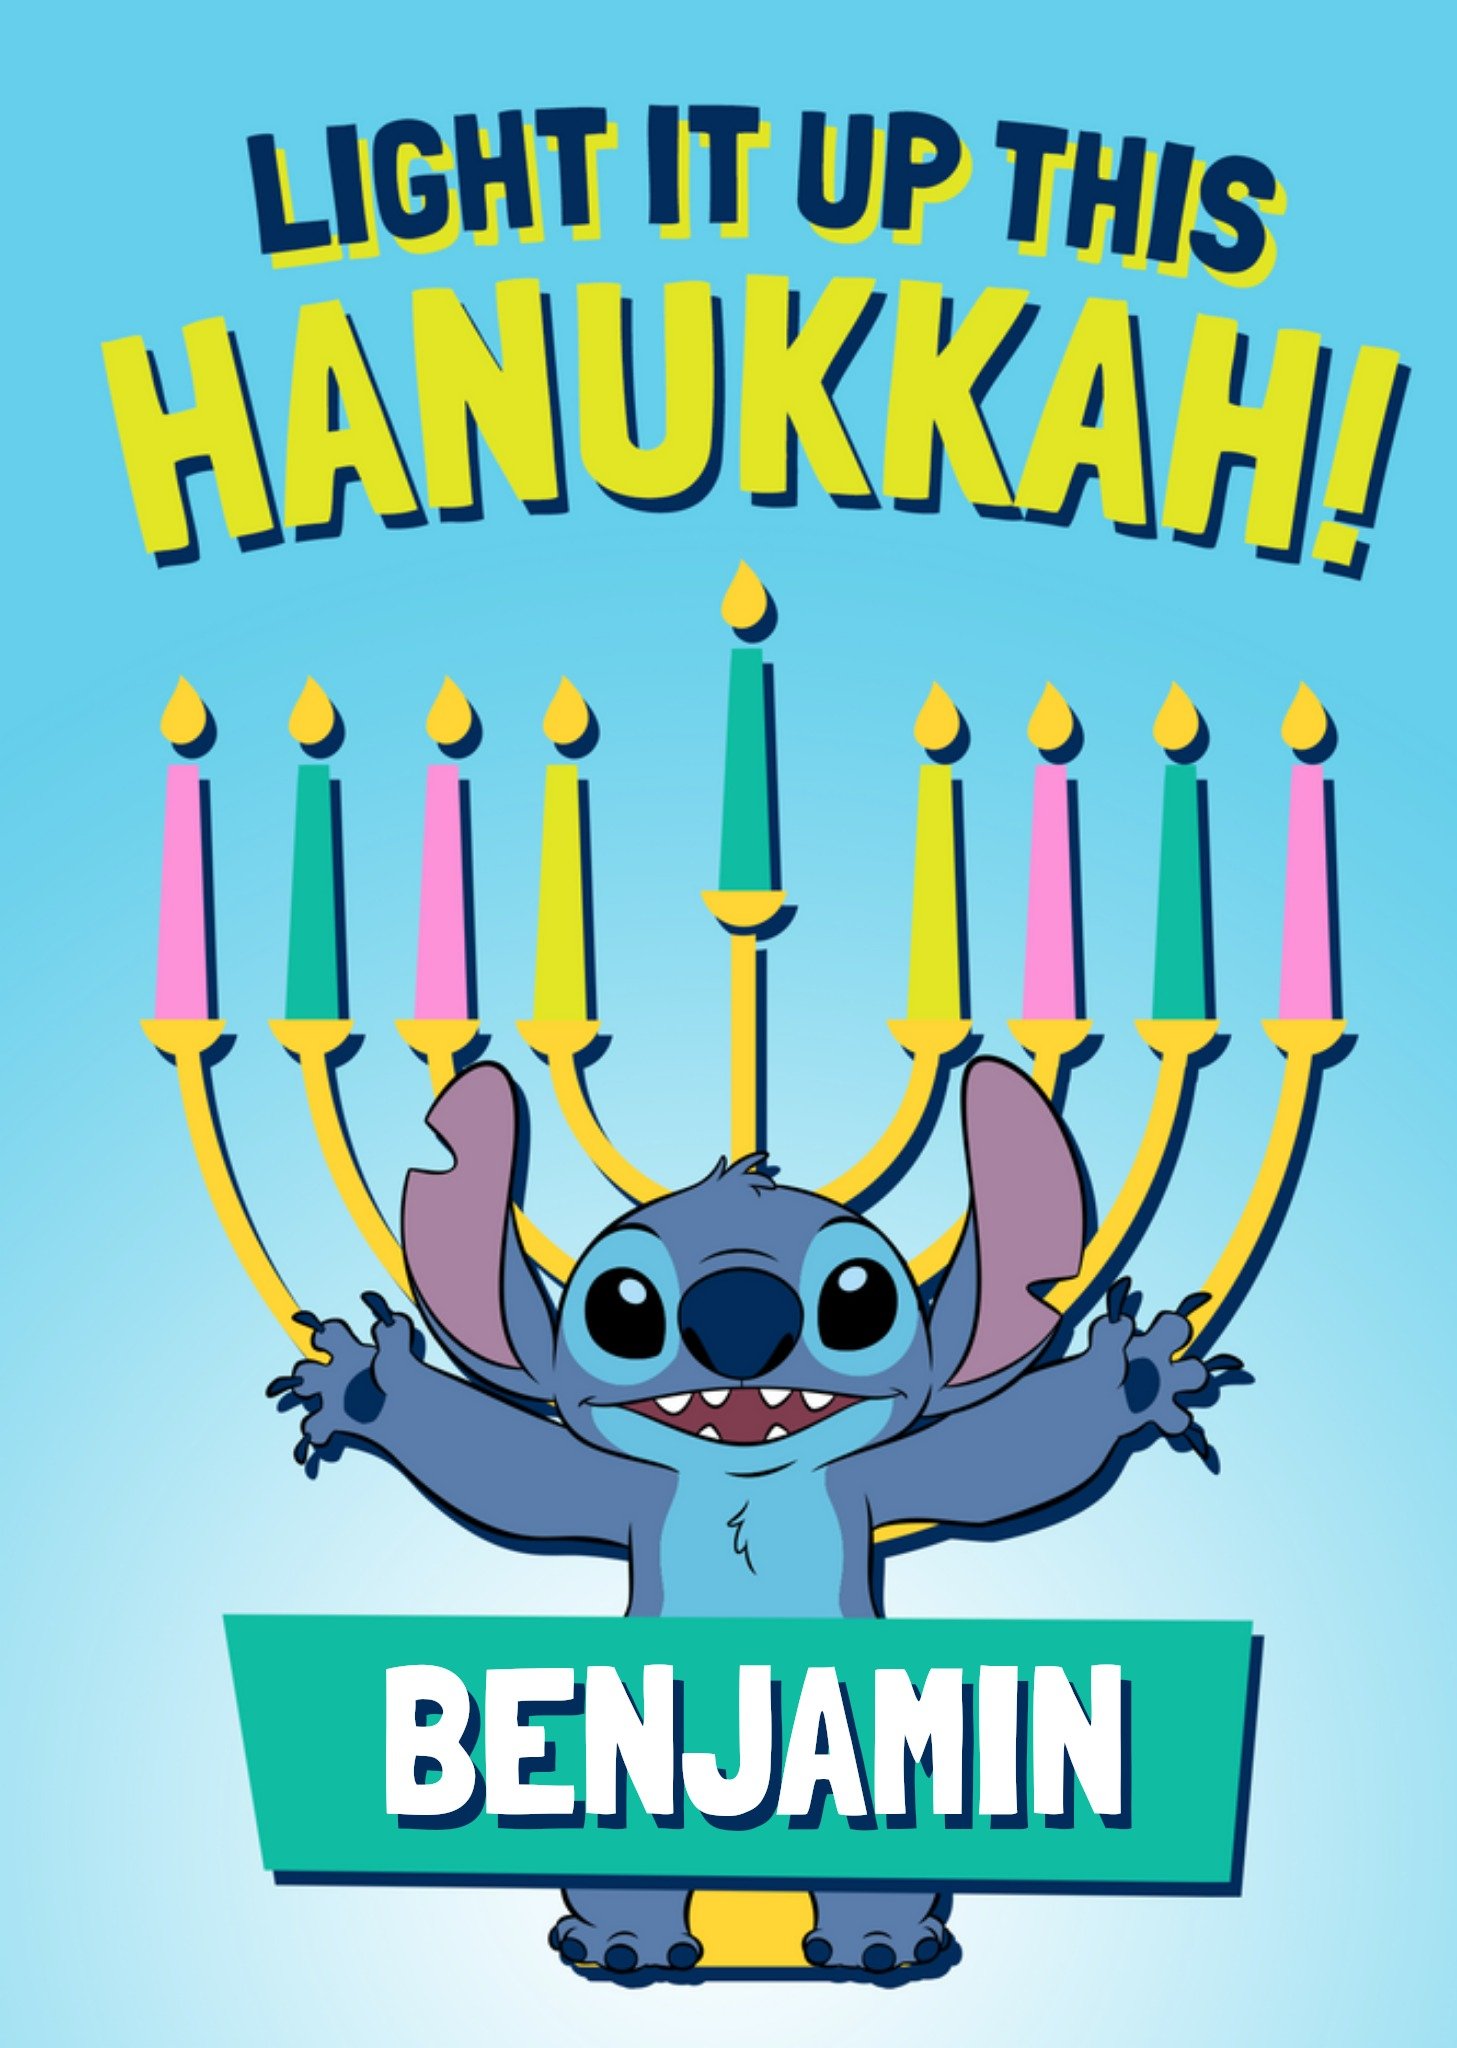 Disney Lilo And Stitch Light It Up This Hanukkah Card, Large